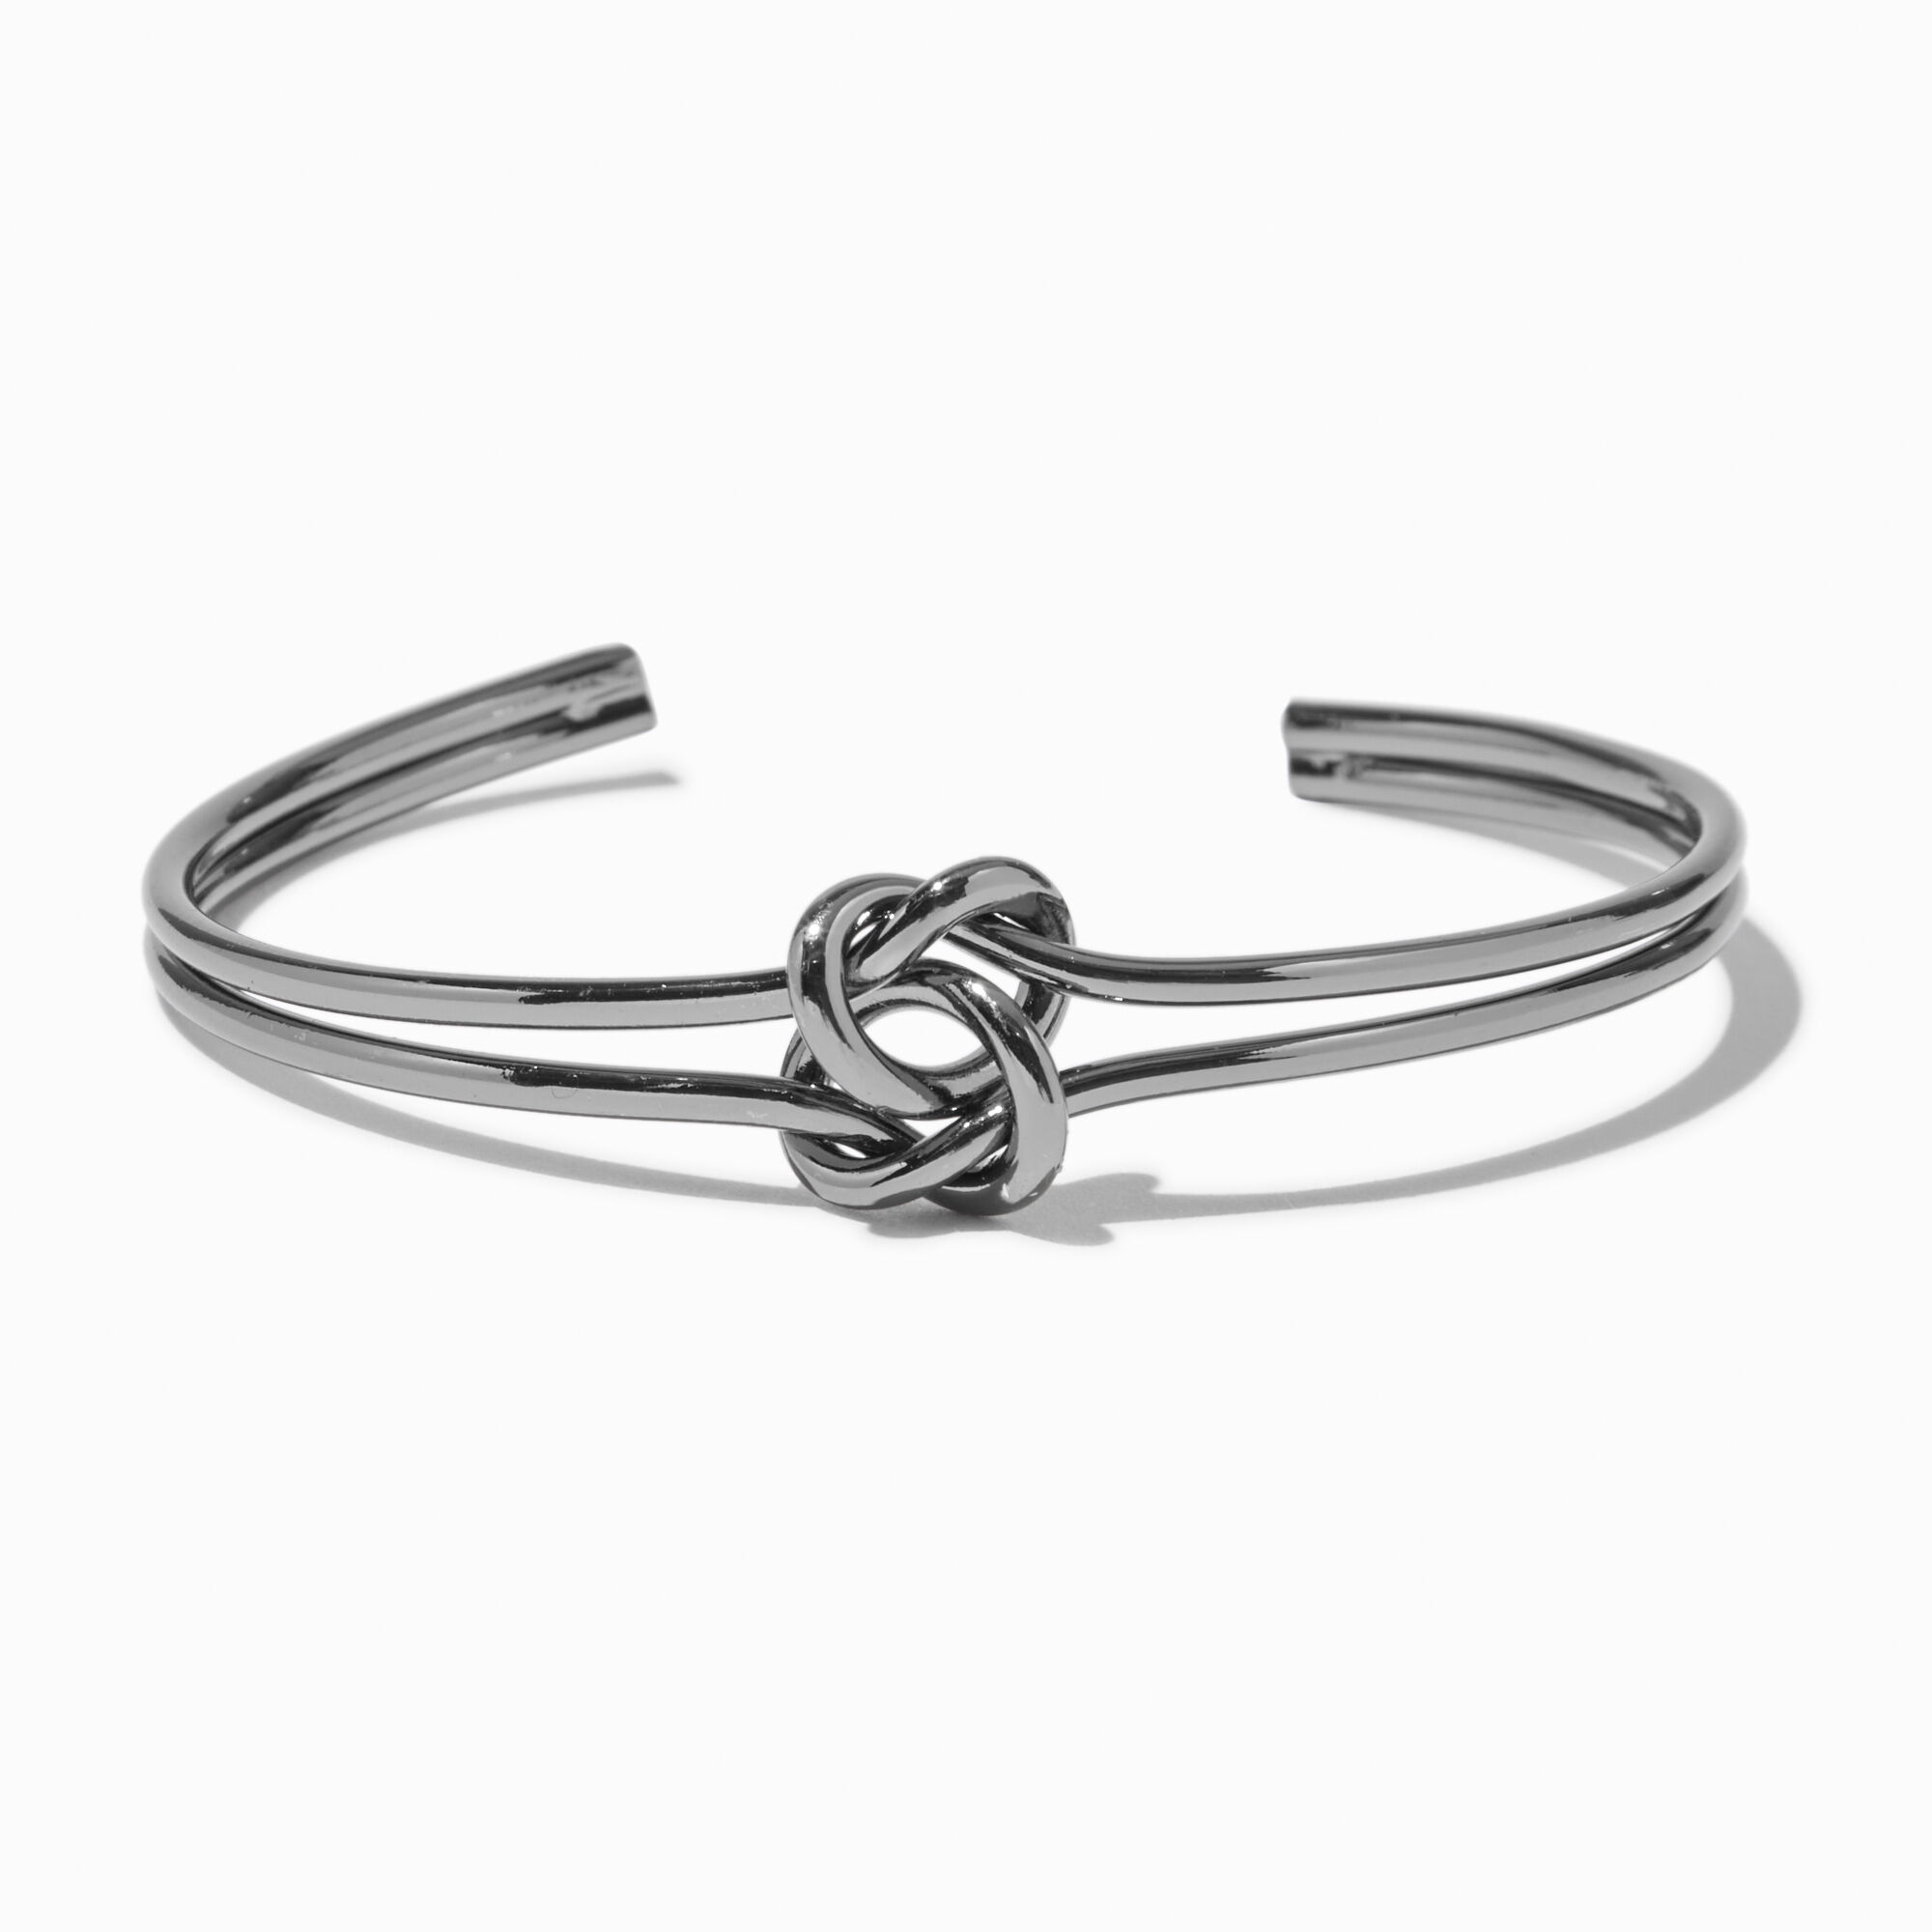 View Claires HematiteTone Double Knot Cuff Bracelet information